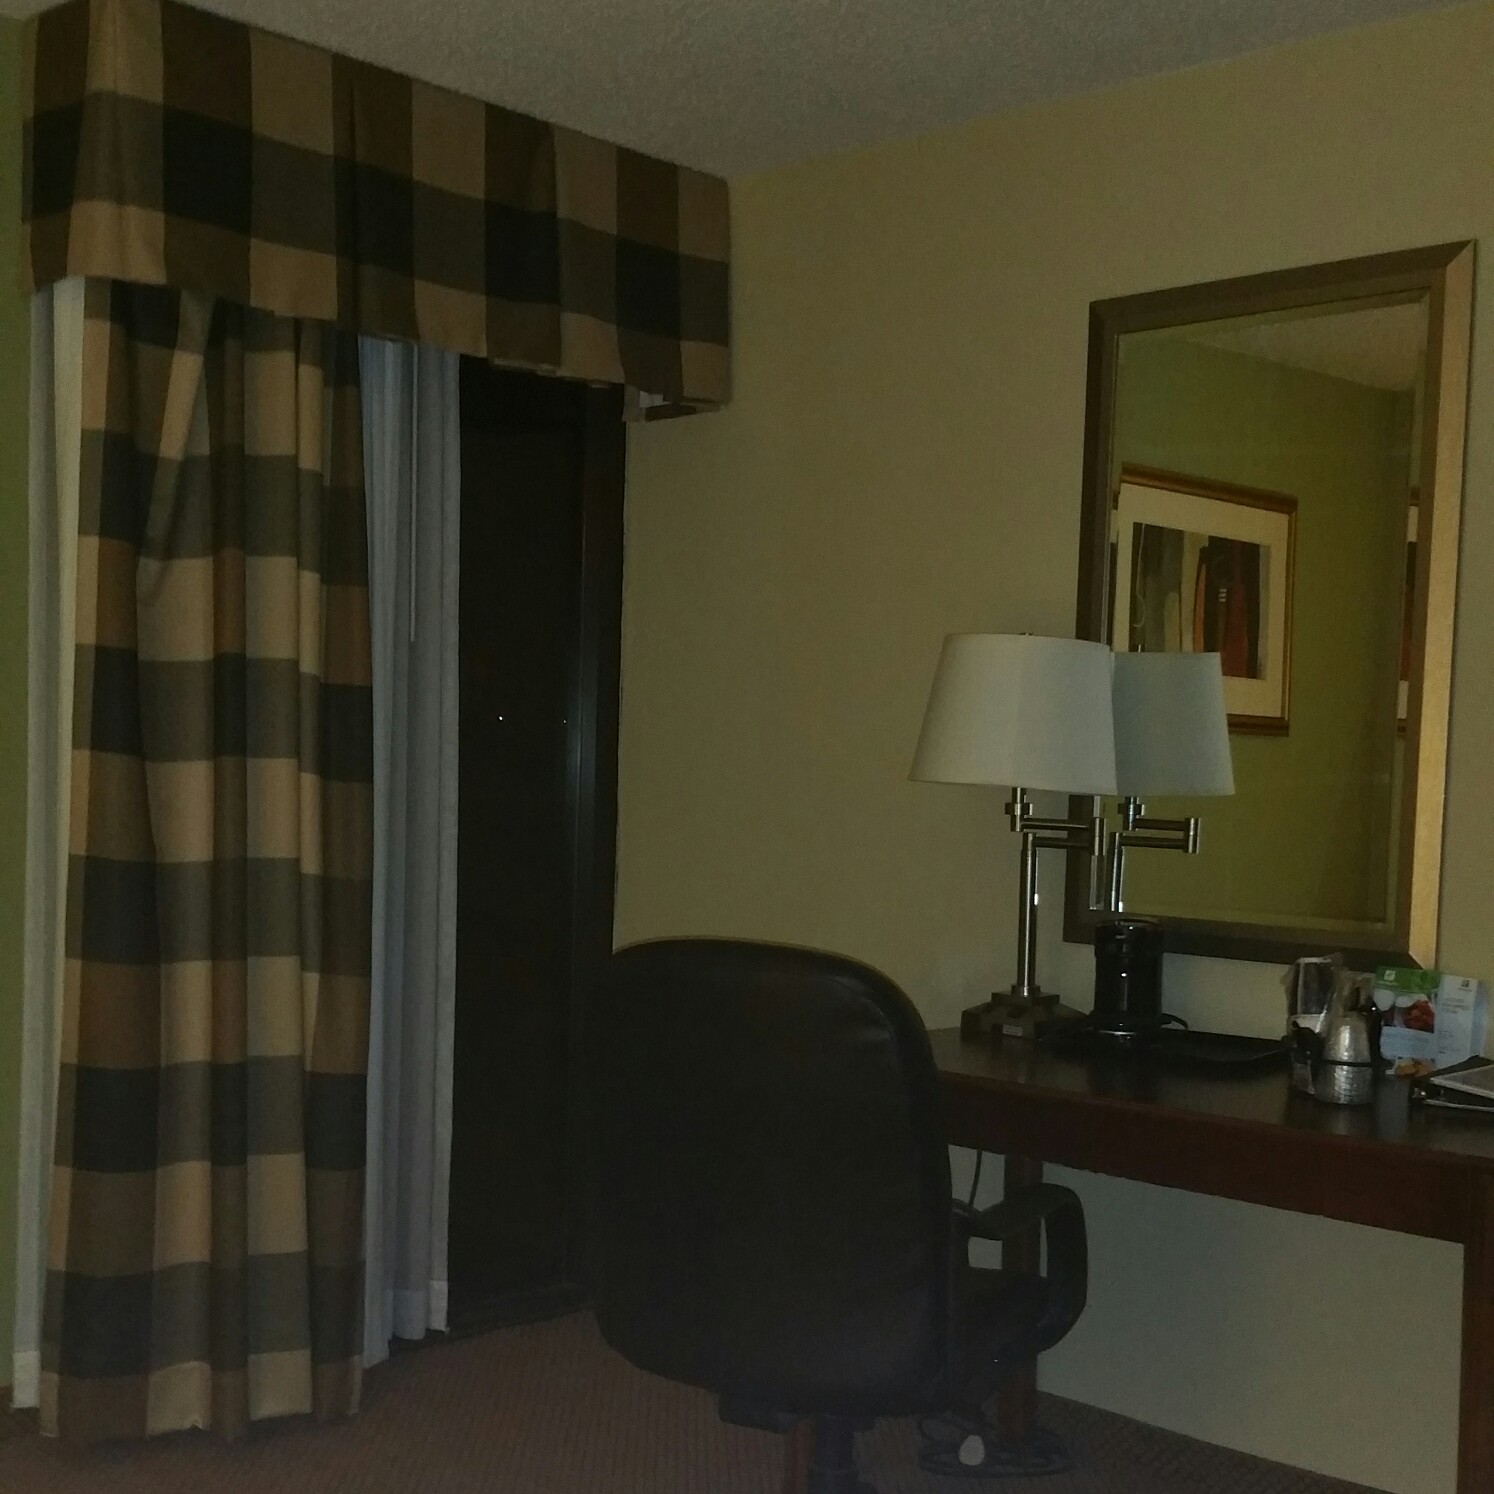 Holiday Inn, 6170 Morgantown Rd. (Morgantown, PA)